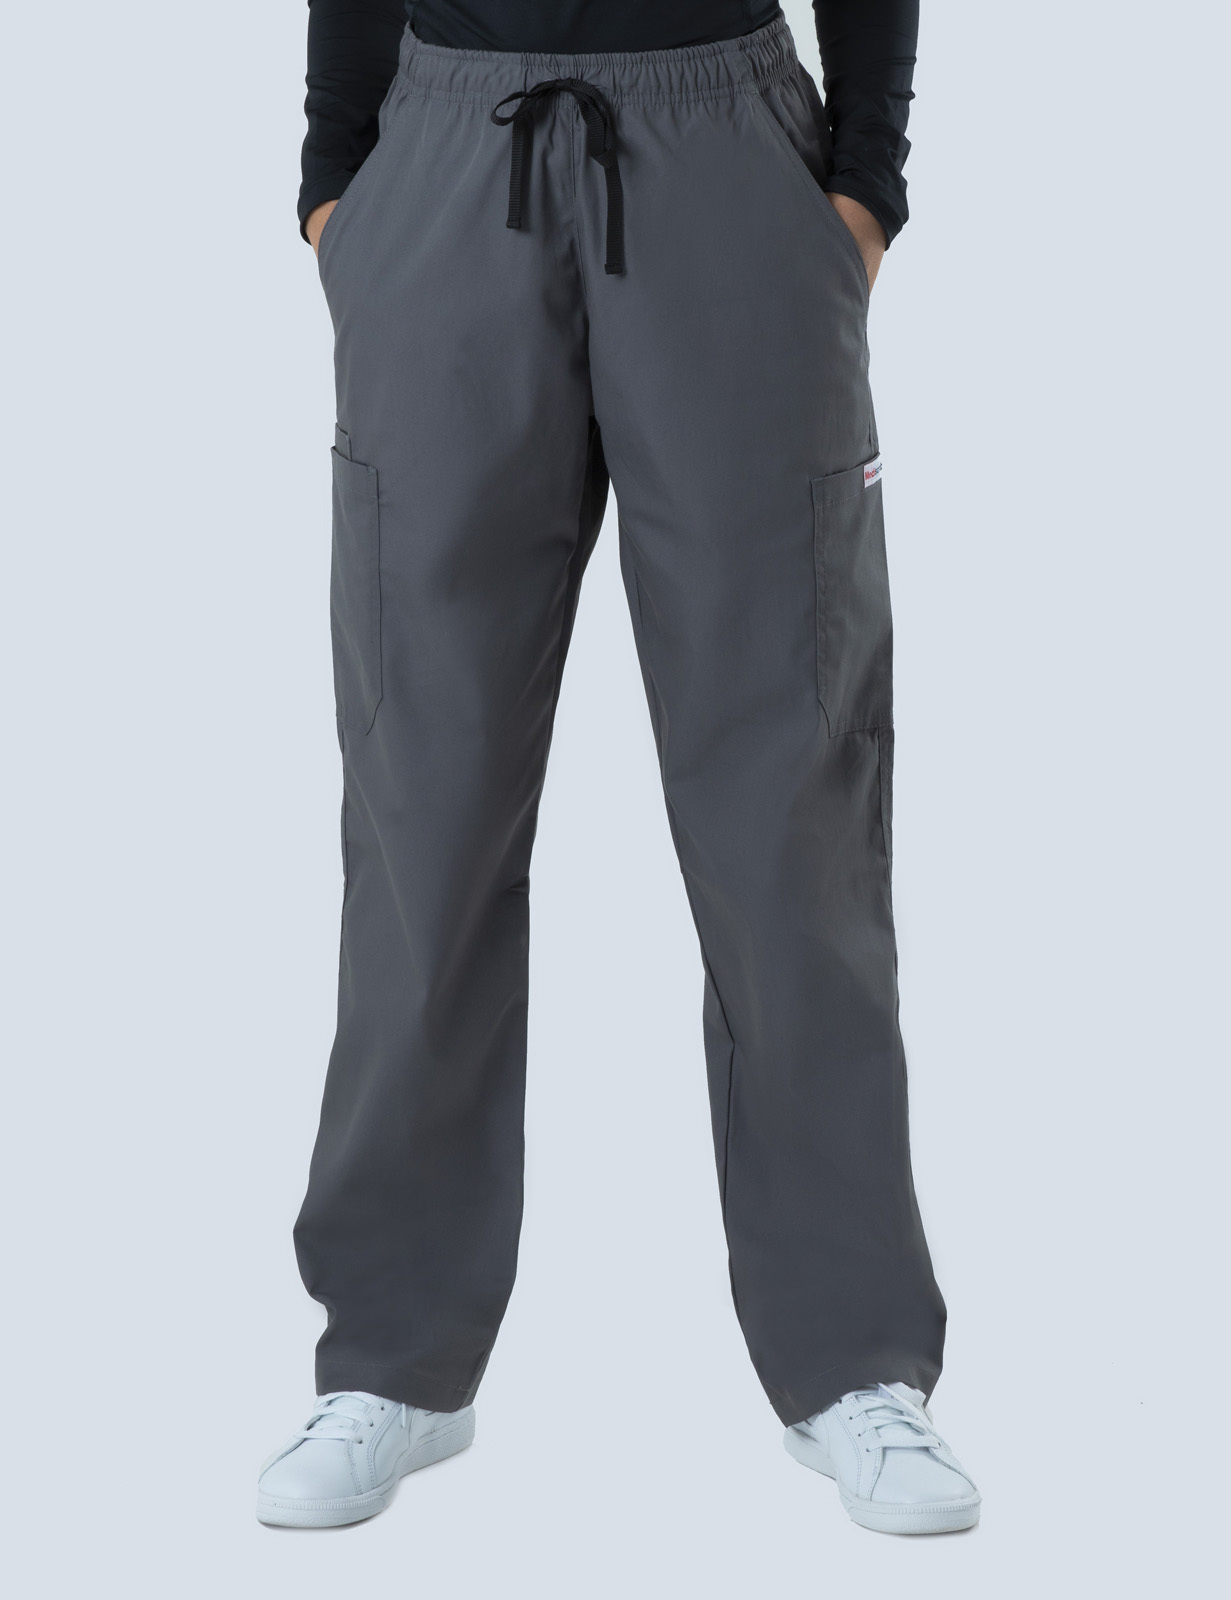 Women's Cargo Performance Pants - Steel Grey - 5x Large